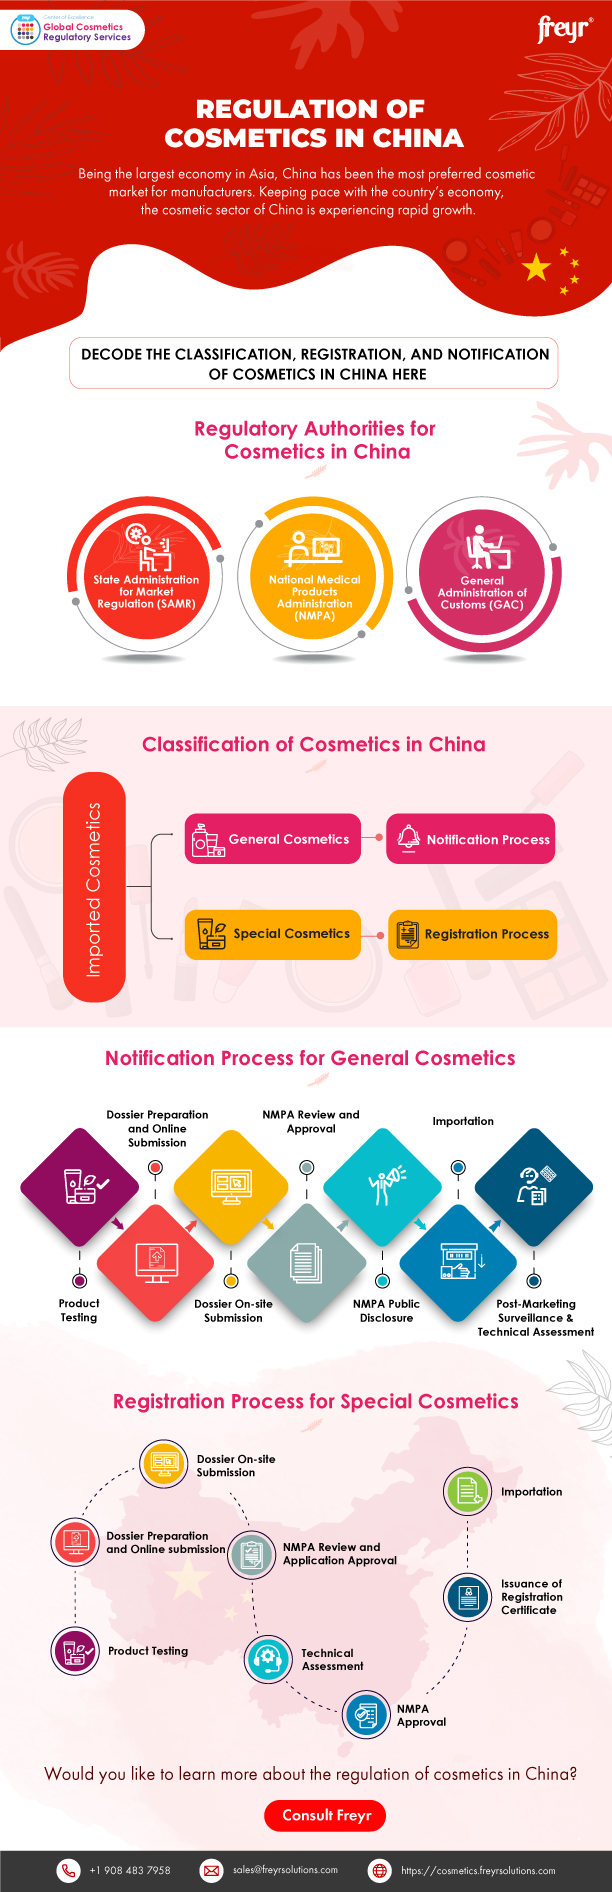 Regulation of Cosmetics in China